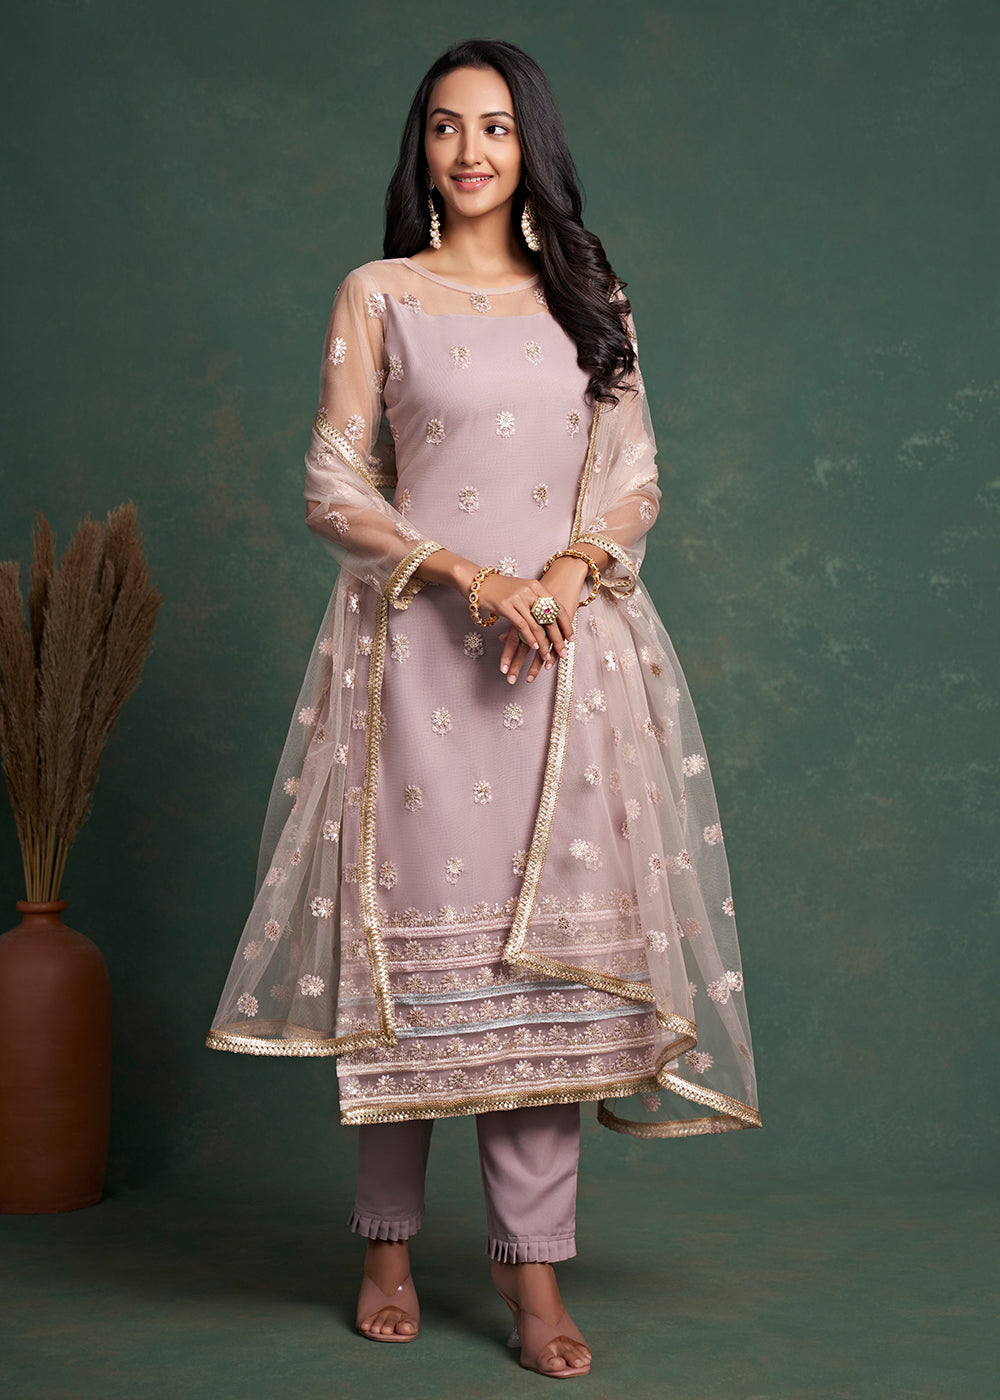 Buy Now Fabulous Lilac Zari & Sequins Work Net Wedding Wear Salwar Suit Online in USA, UK, Canada, Germany, Australia & Worldwide at Empress Clothing. 